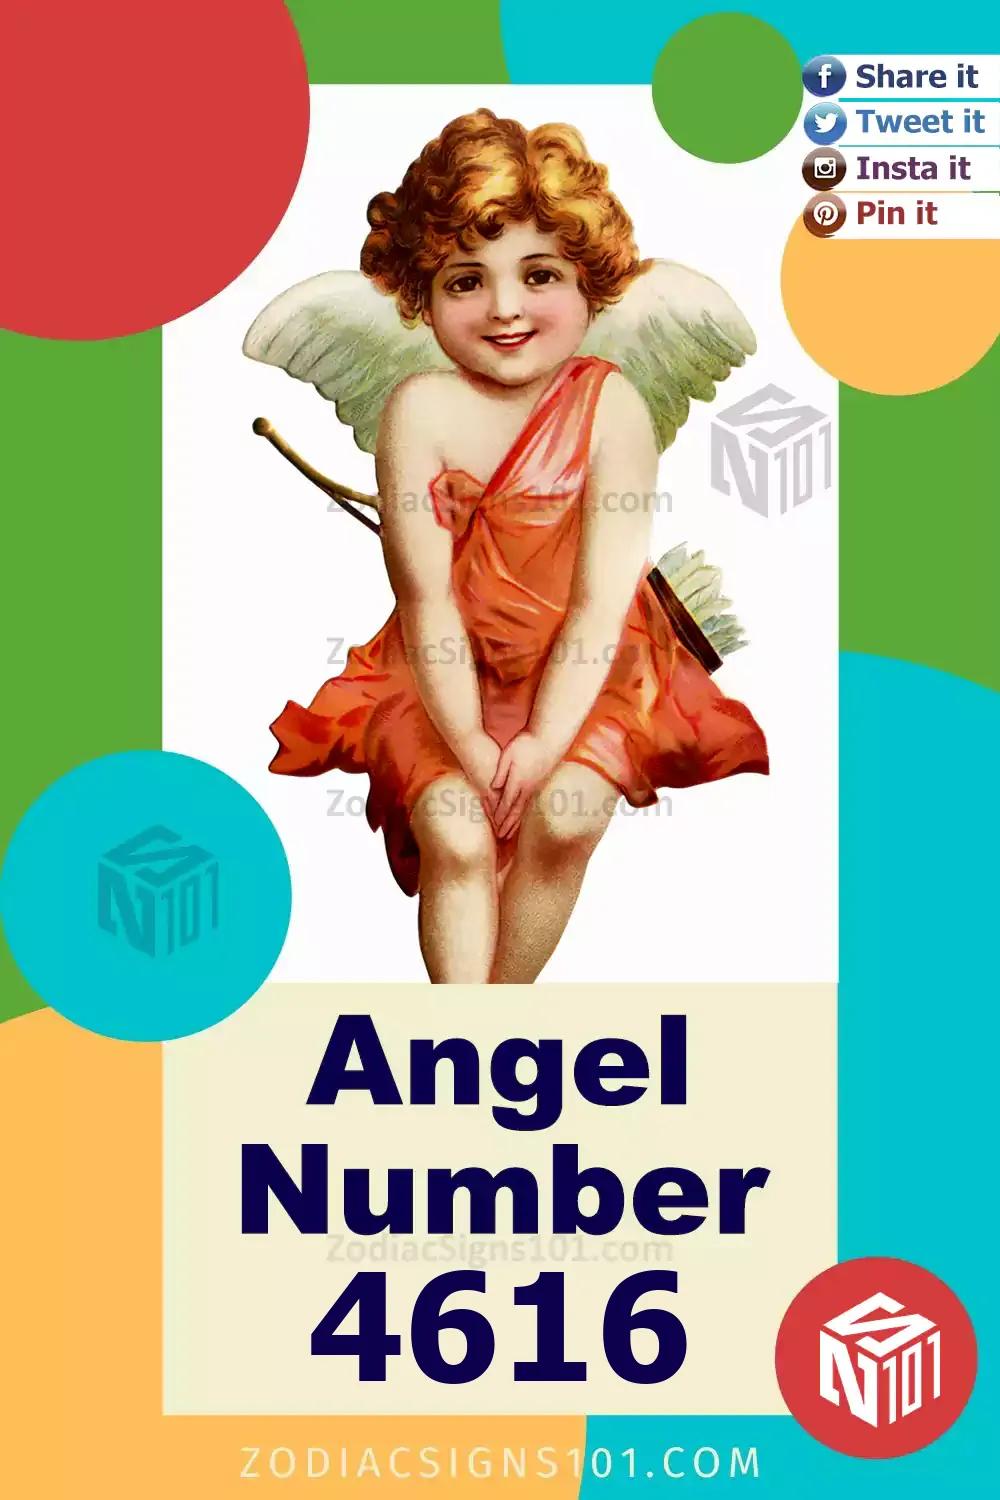 4616-Angel-Number-Meaning.jpg